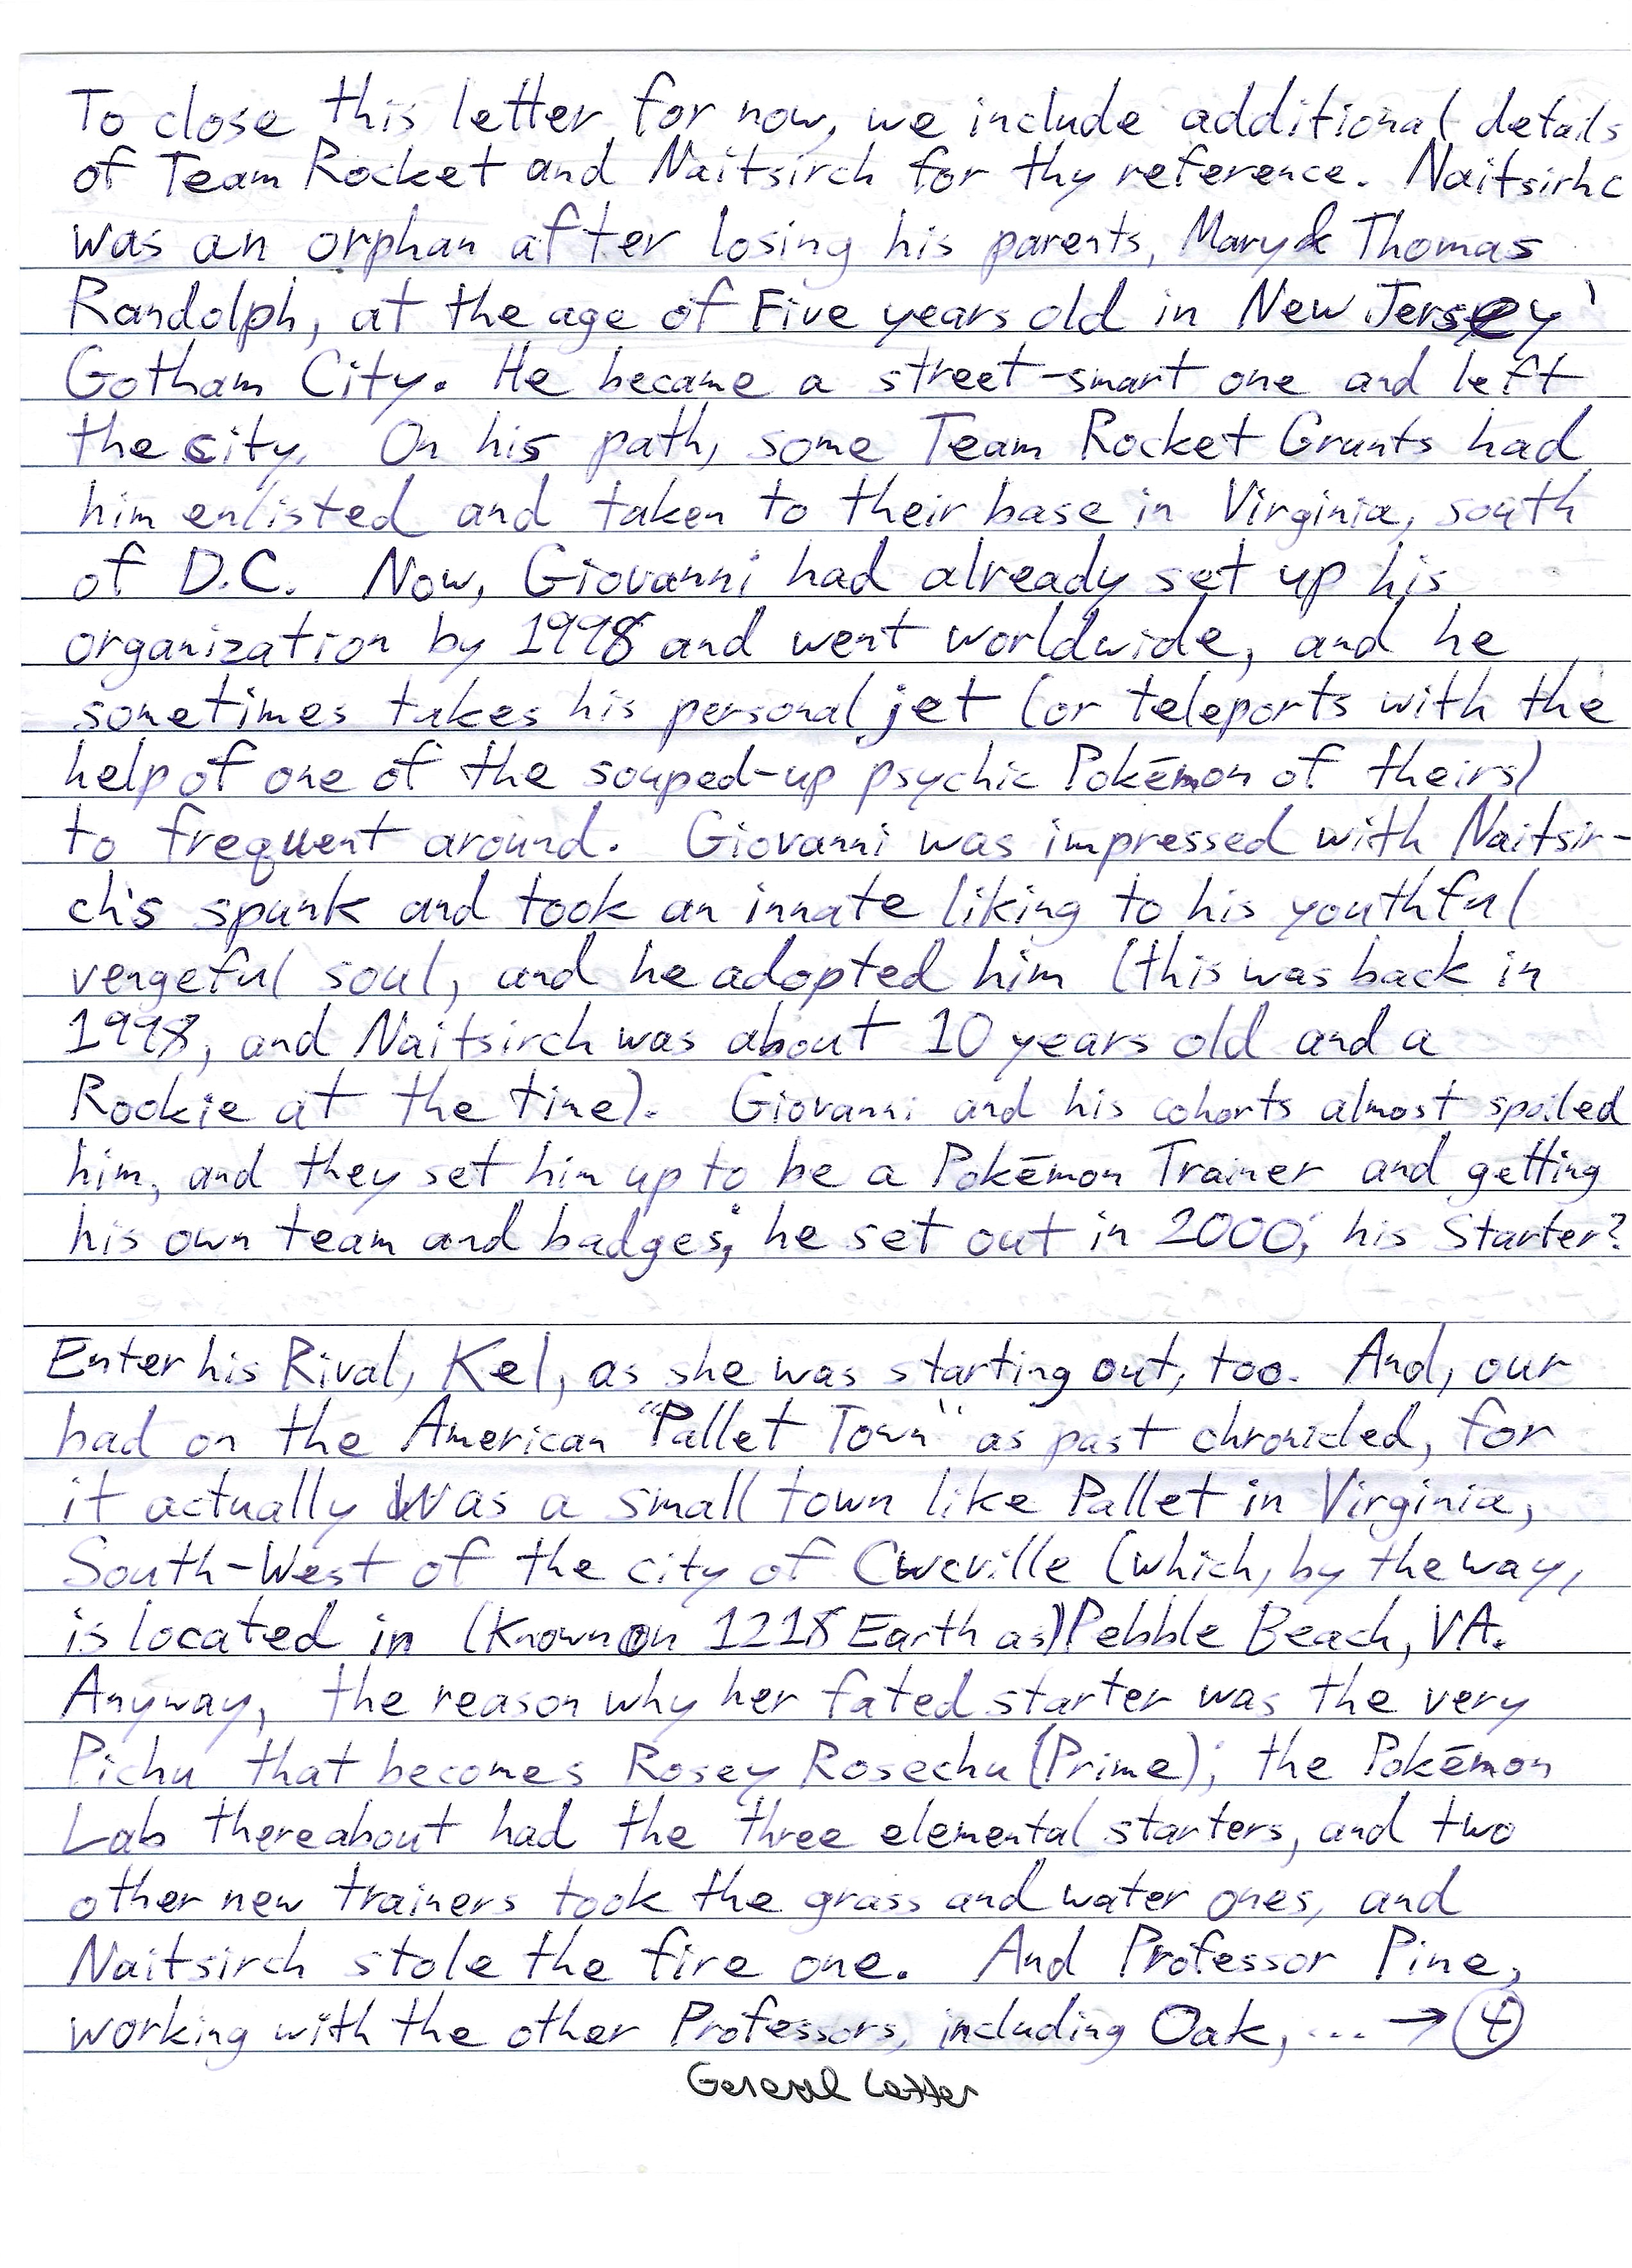 General Letter Page 6.jpg